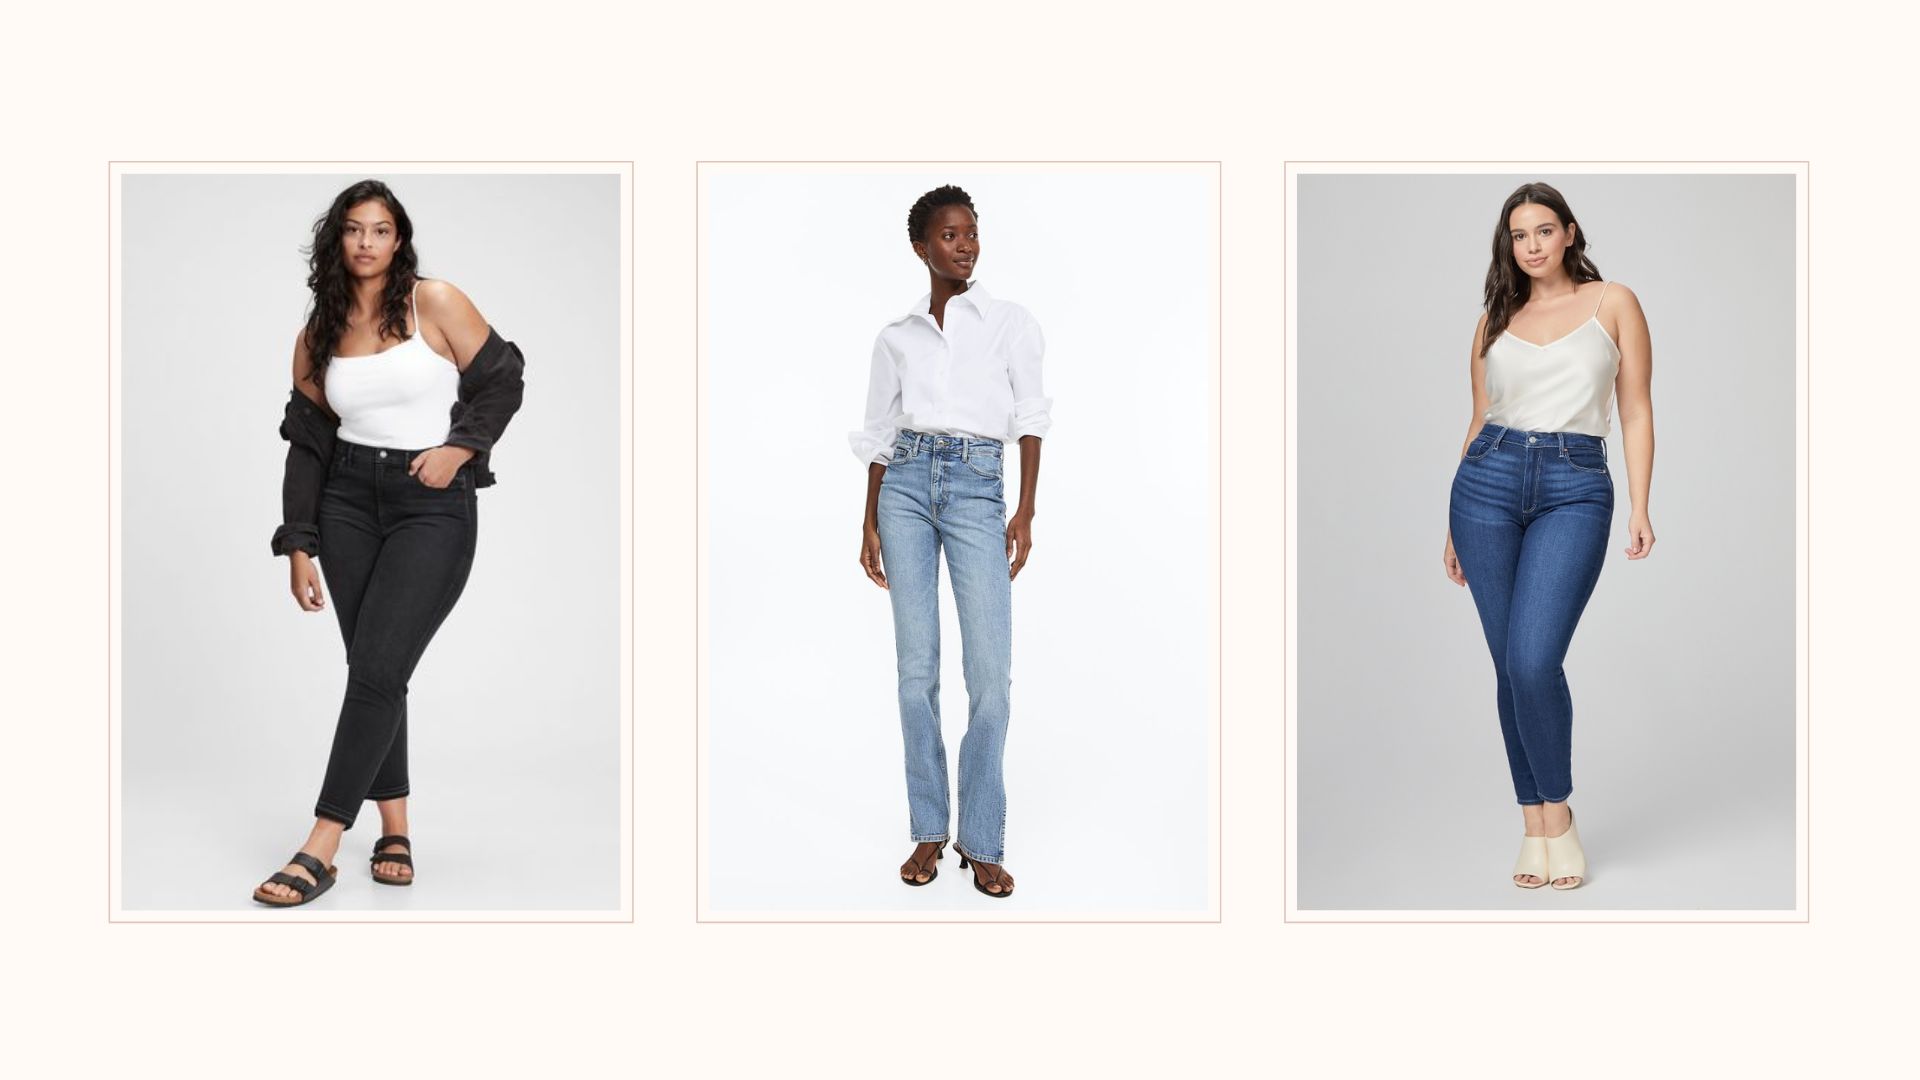 Split hem flared jeans, Various colors, Collection 2021